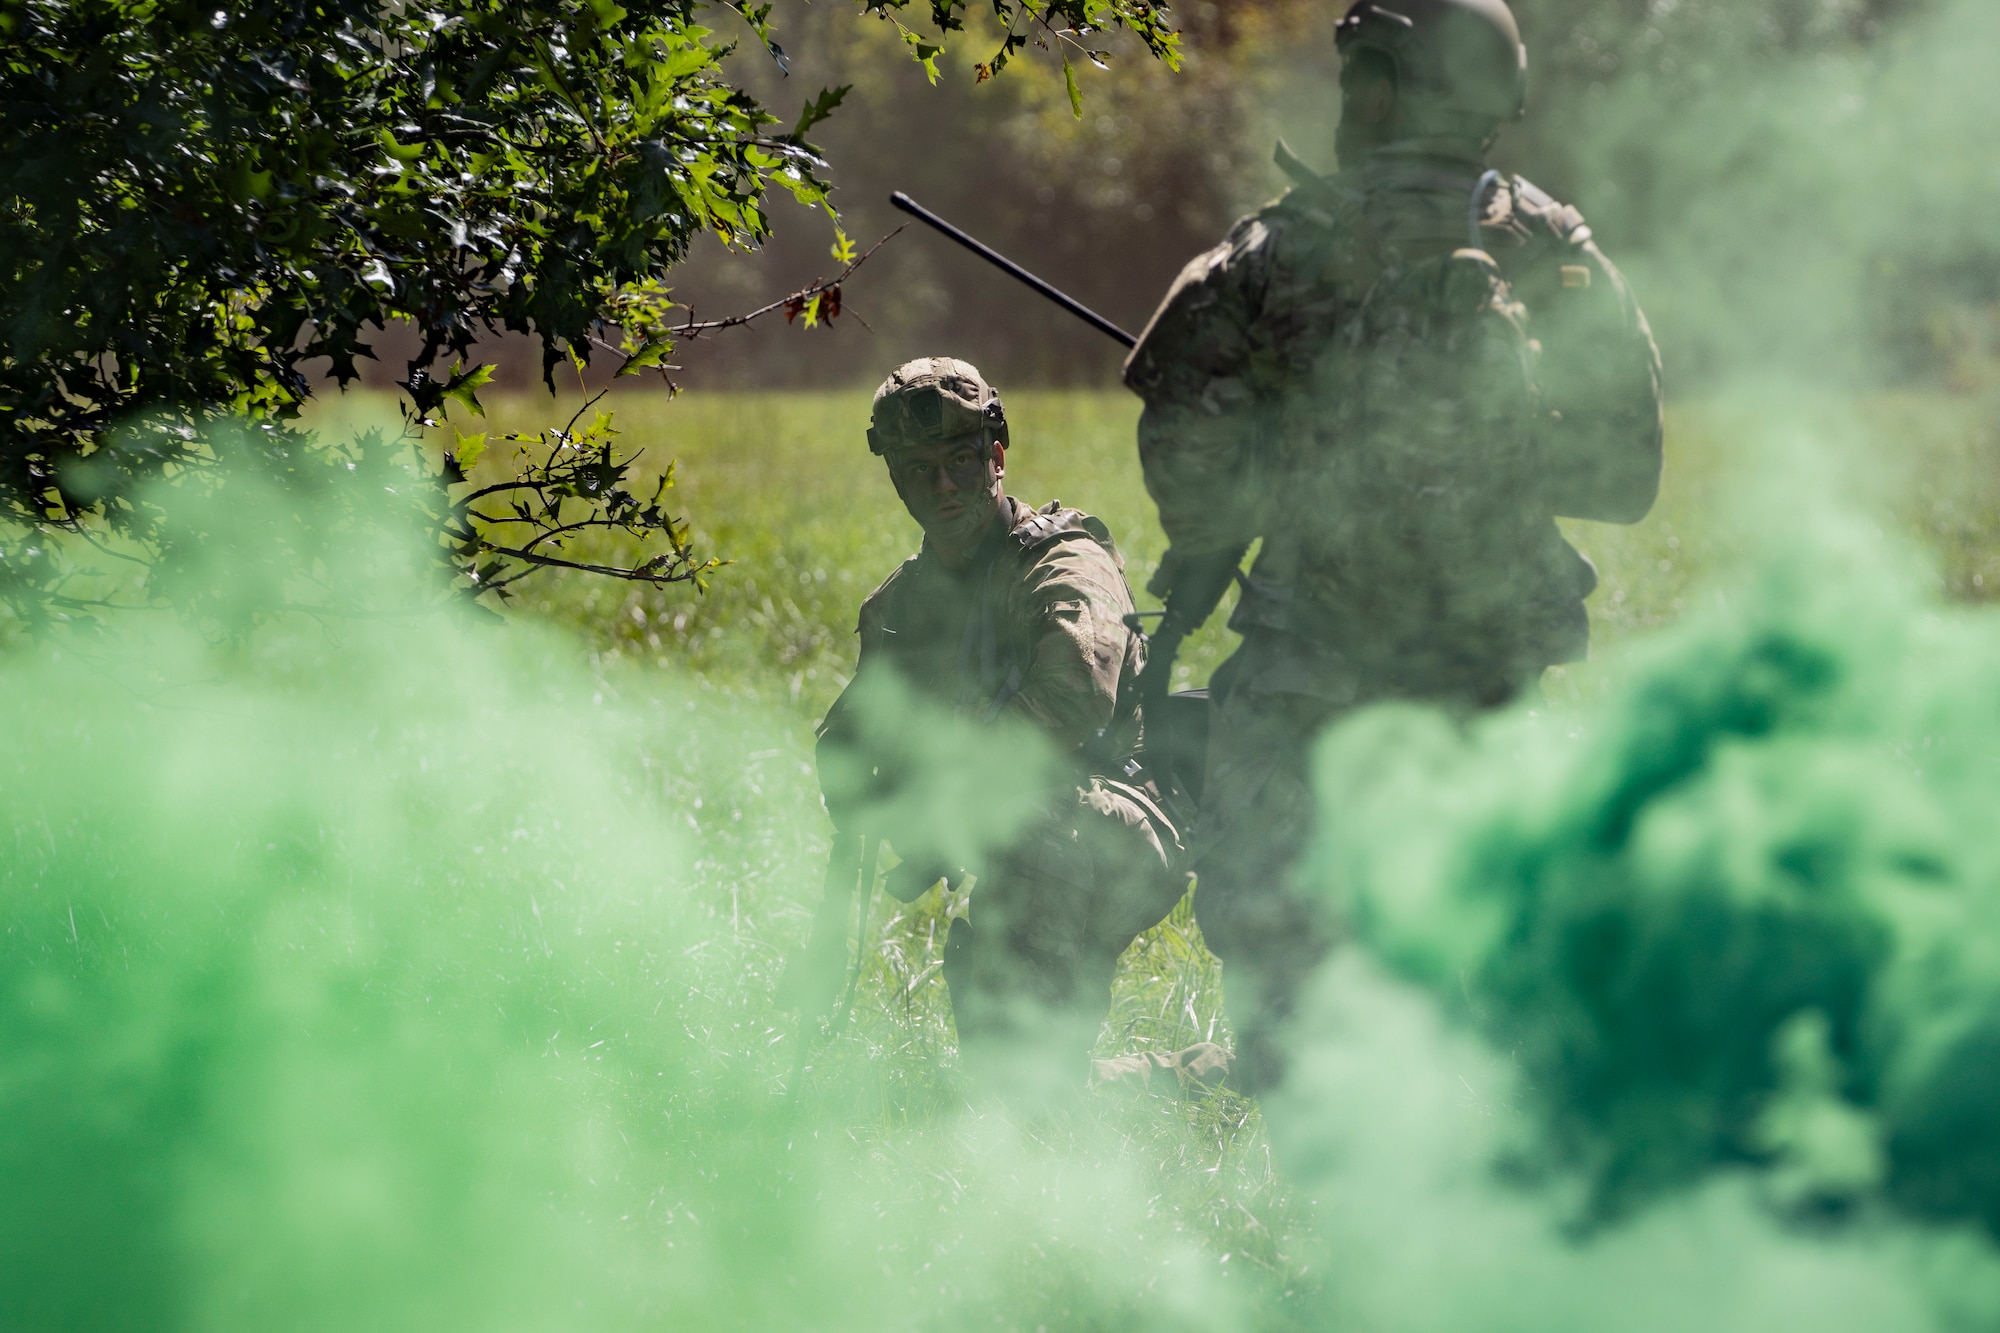 Airmen walk through a smog of green smoke clouds.